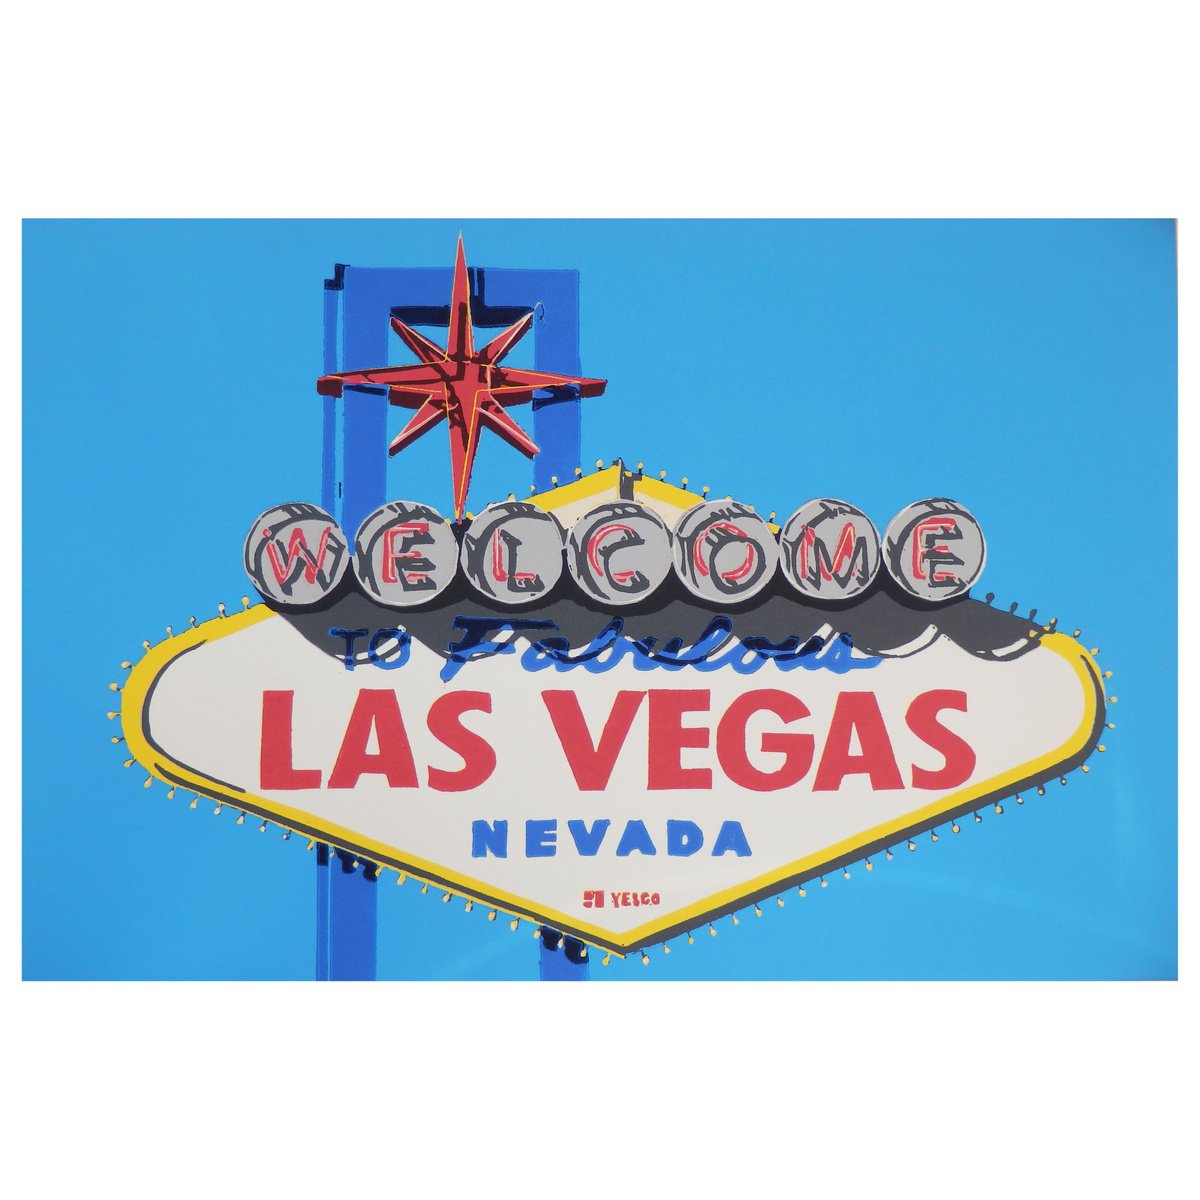 Viva Las Vegas by Kirstie Dedman